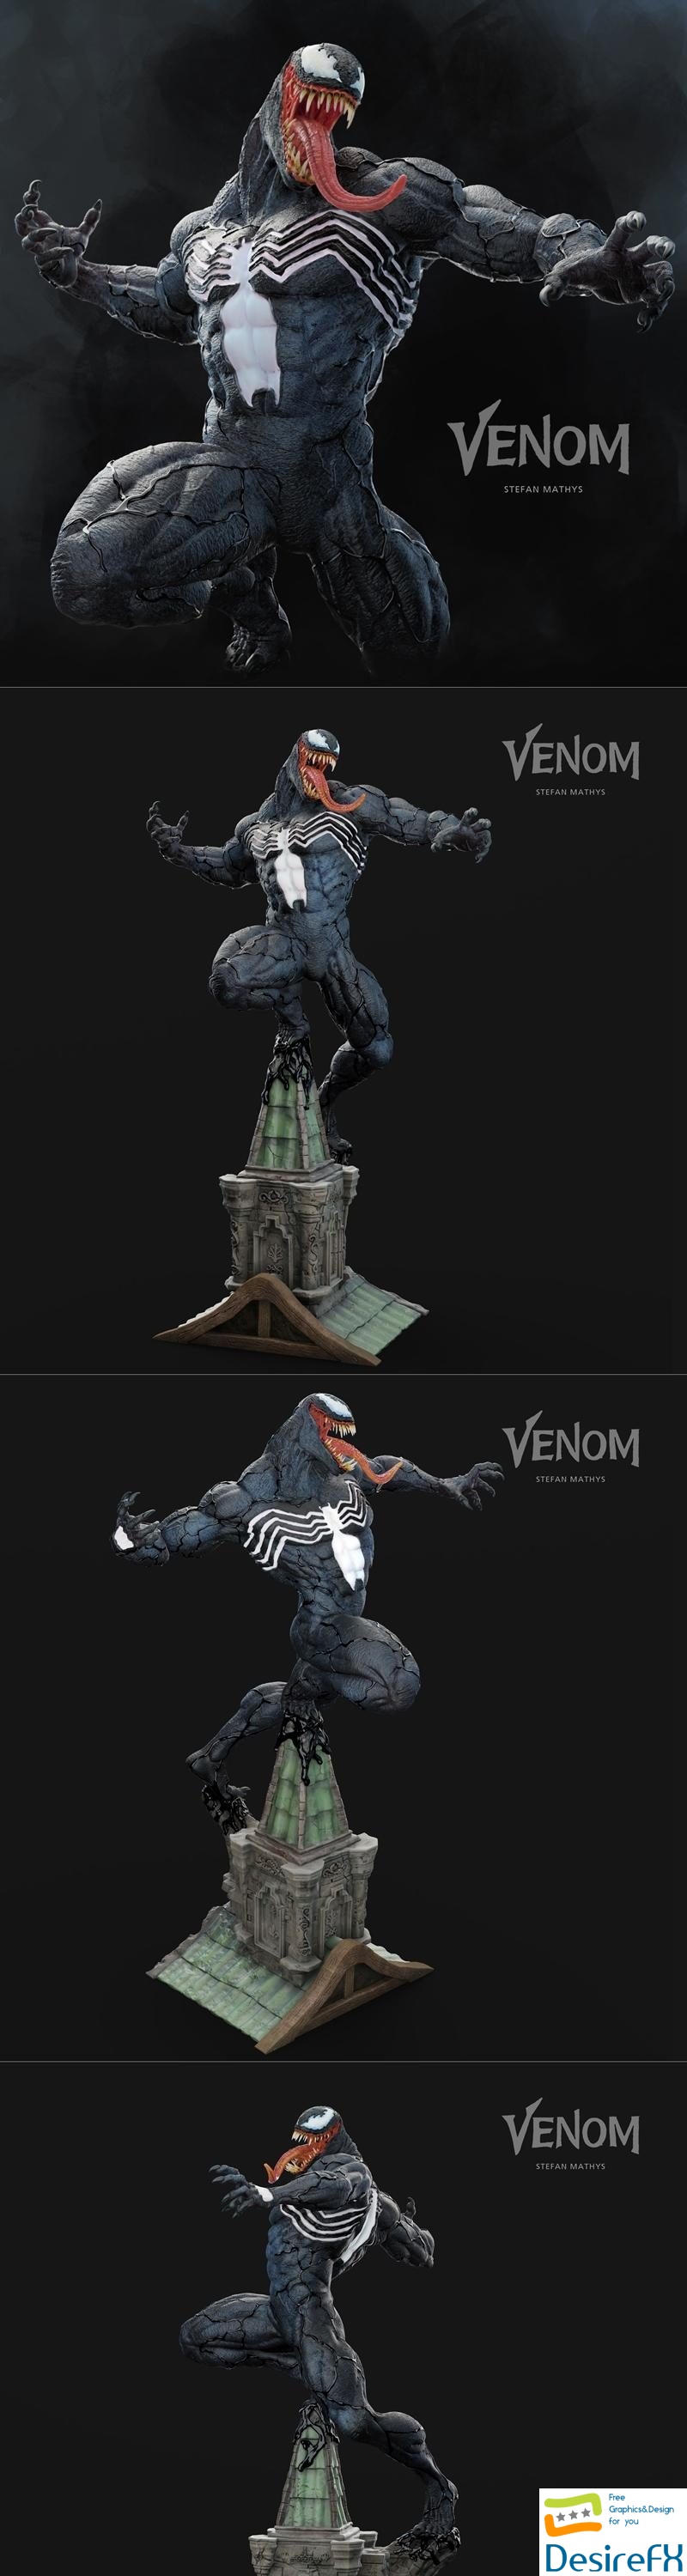 3dsqulpts - Venom Tower 3D Print